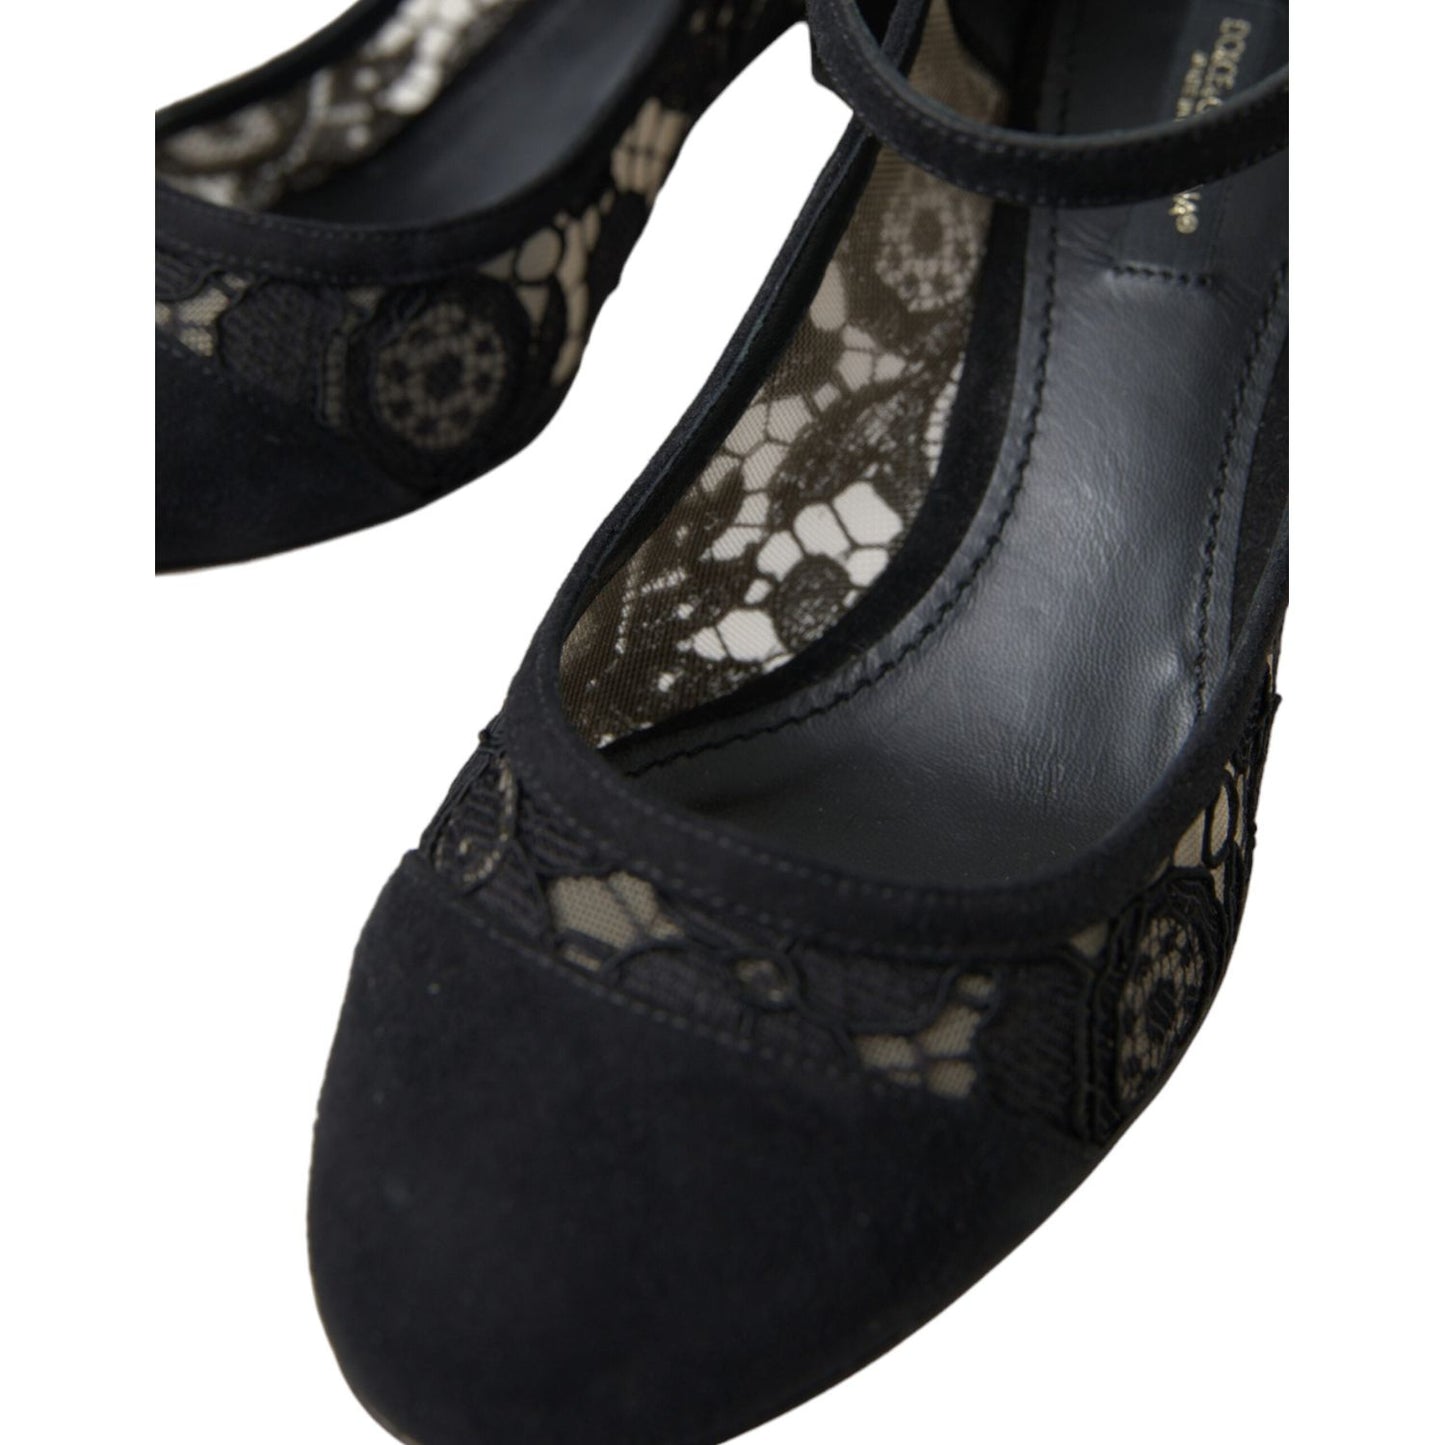 Dolce & Gabbana Elegant Suede Mary Jane Lace Heels black-mary-jane-taormina-lace-pumps-shoes